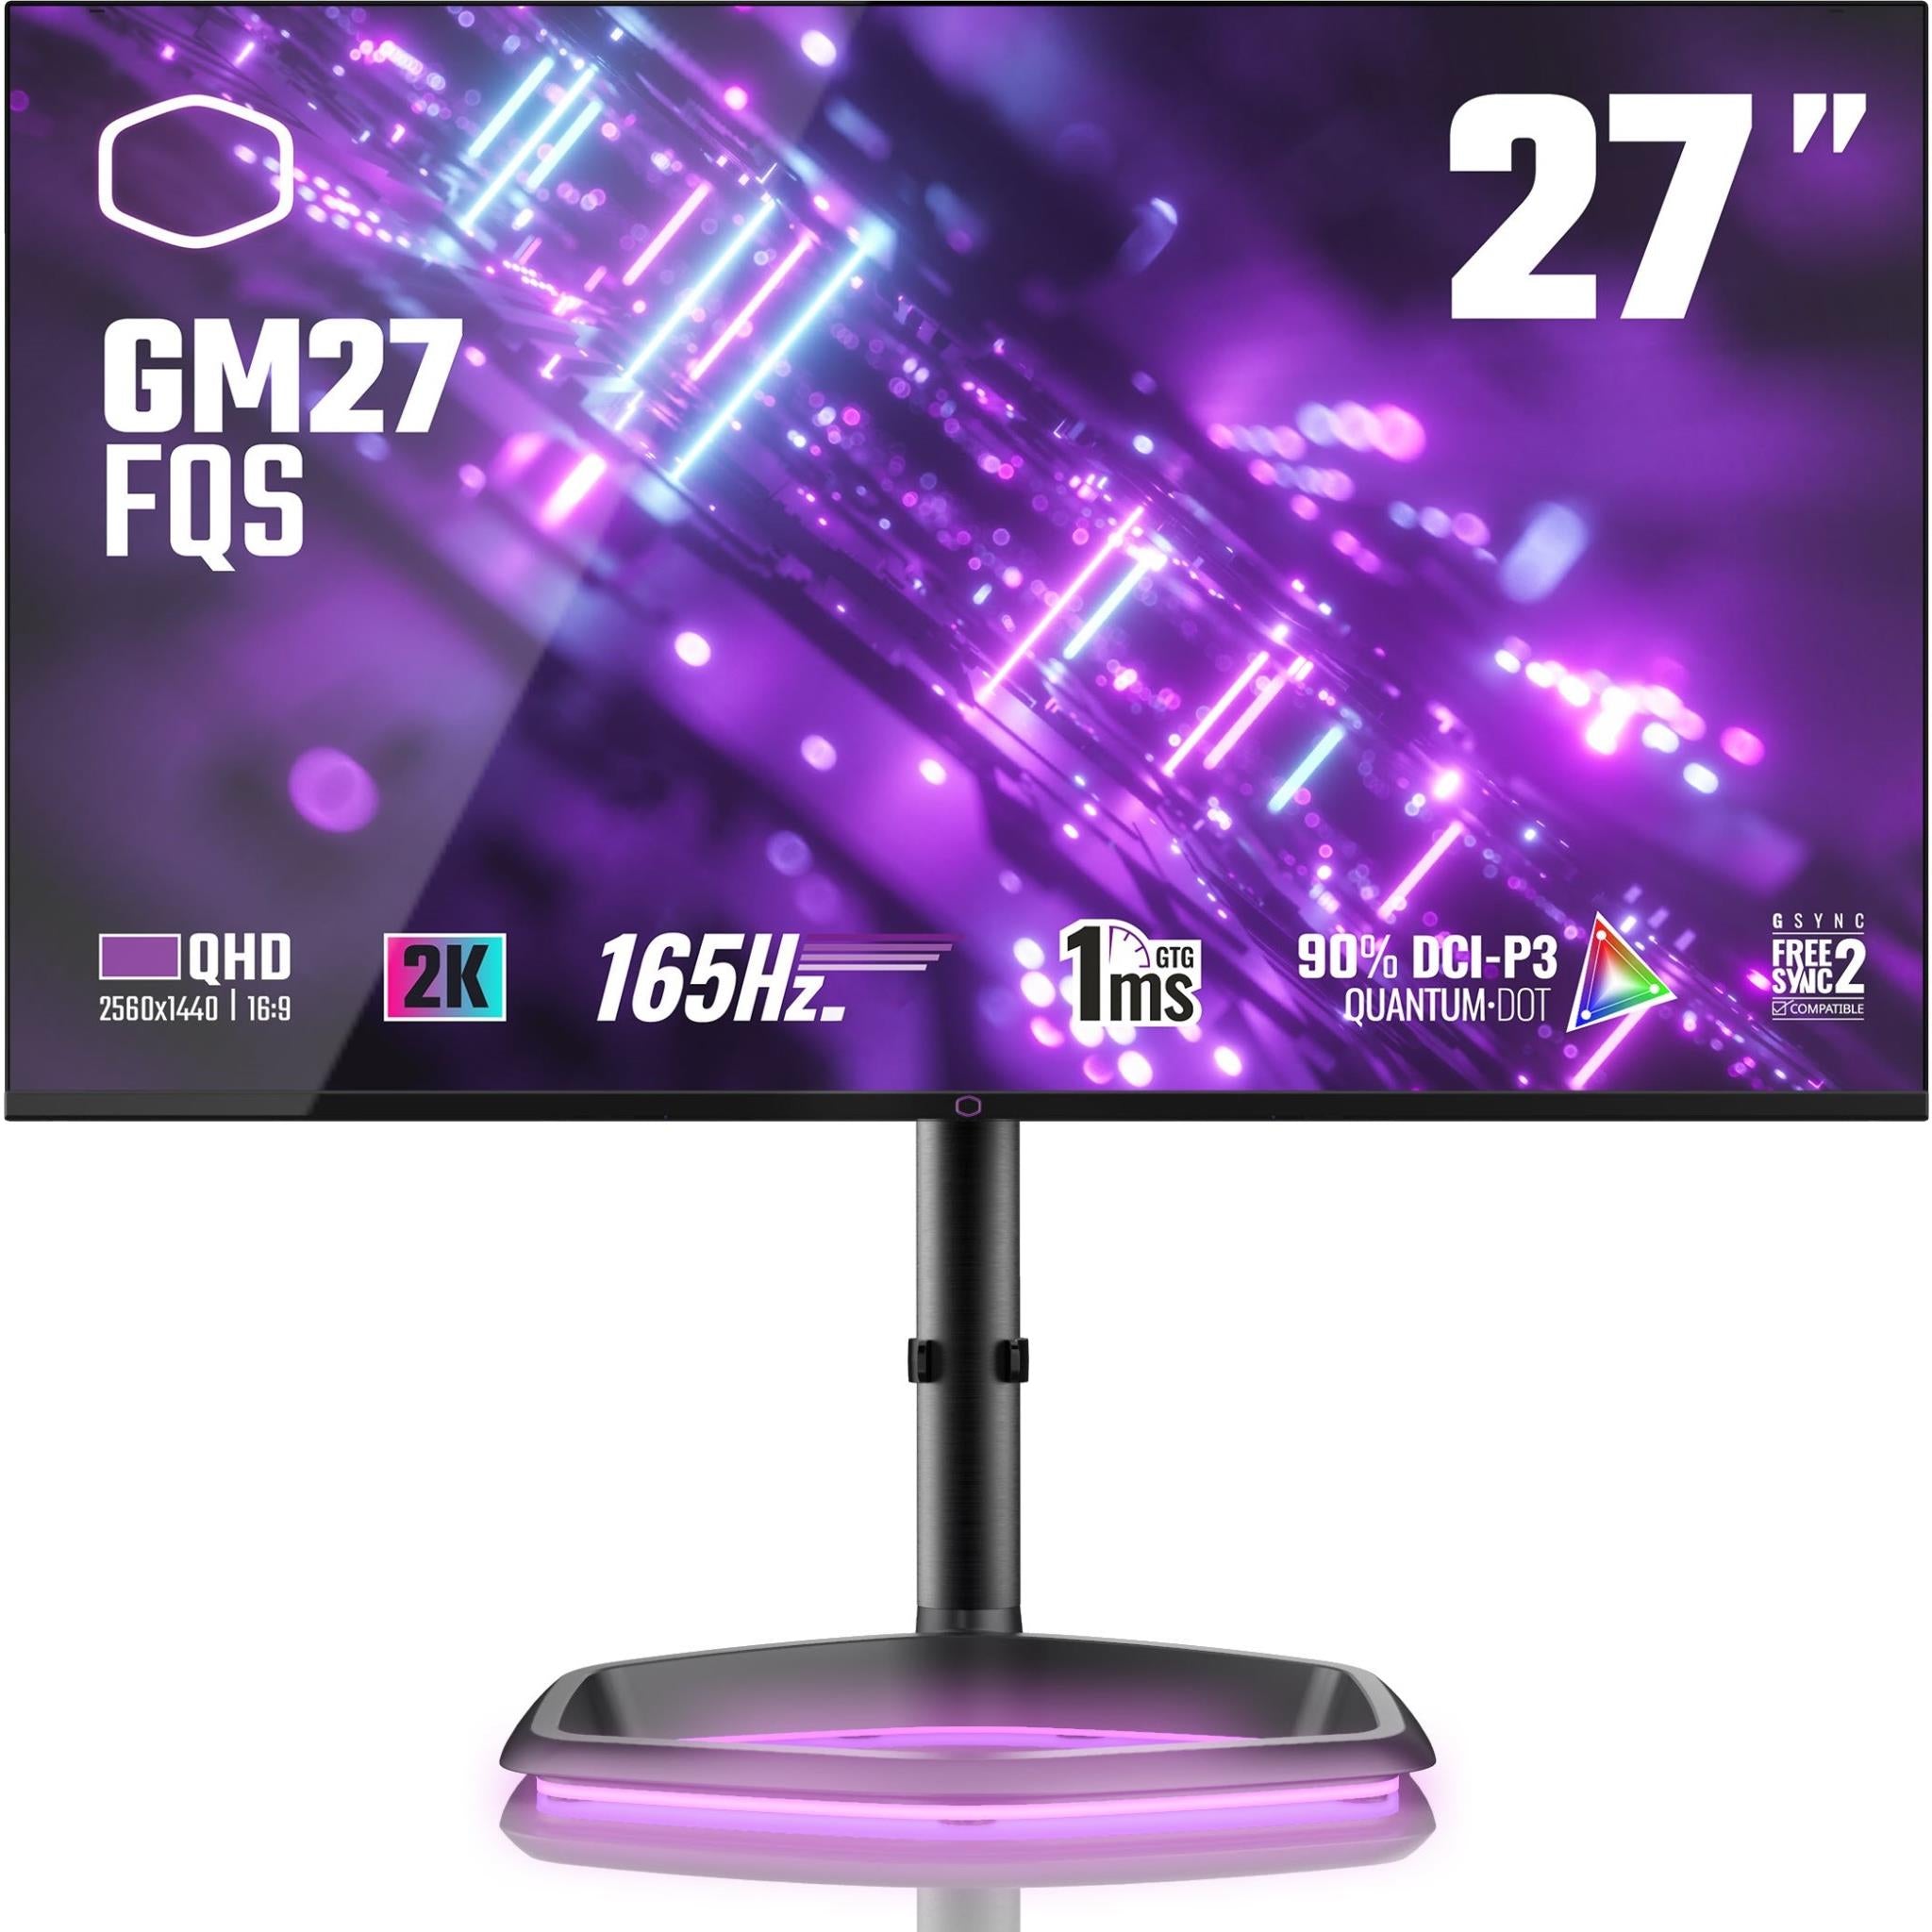 cooler master gm27fqs 27" qhd 165hz gaming monitor